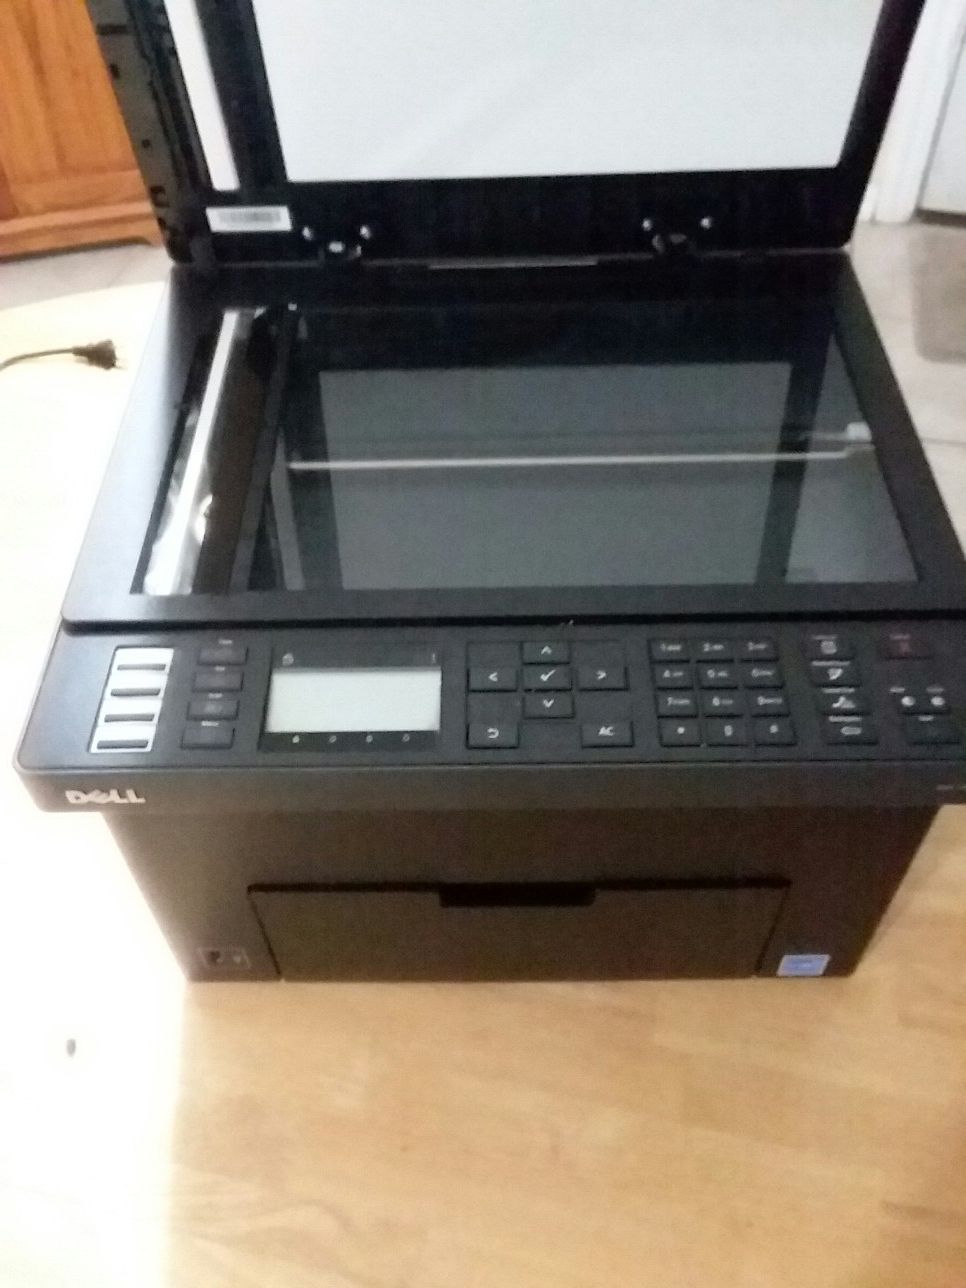 Dell 1355 cnw copier, printer, scanner, fax, ect.